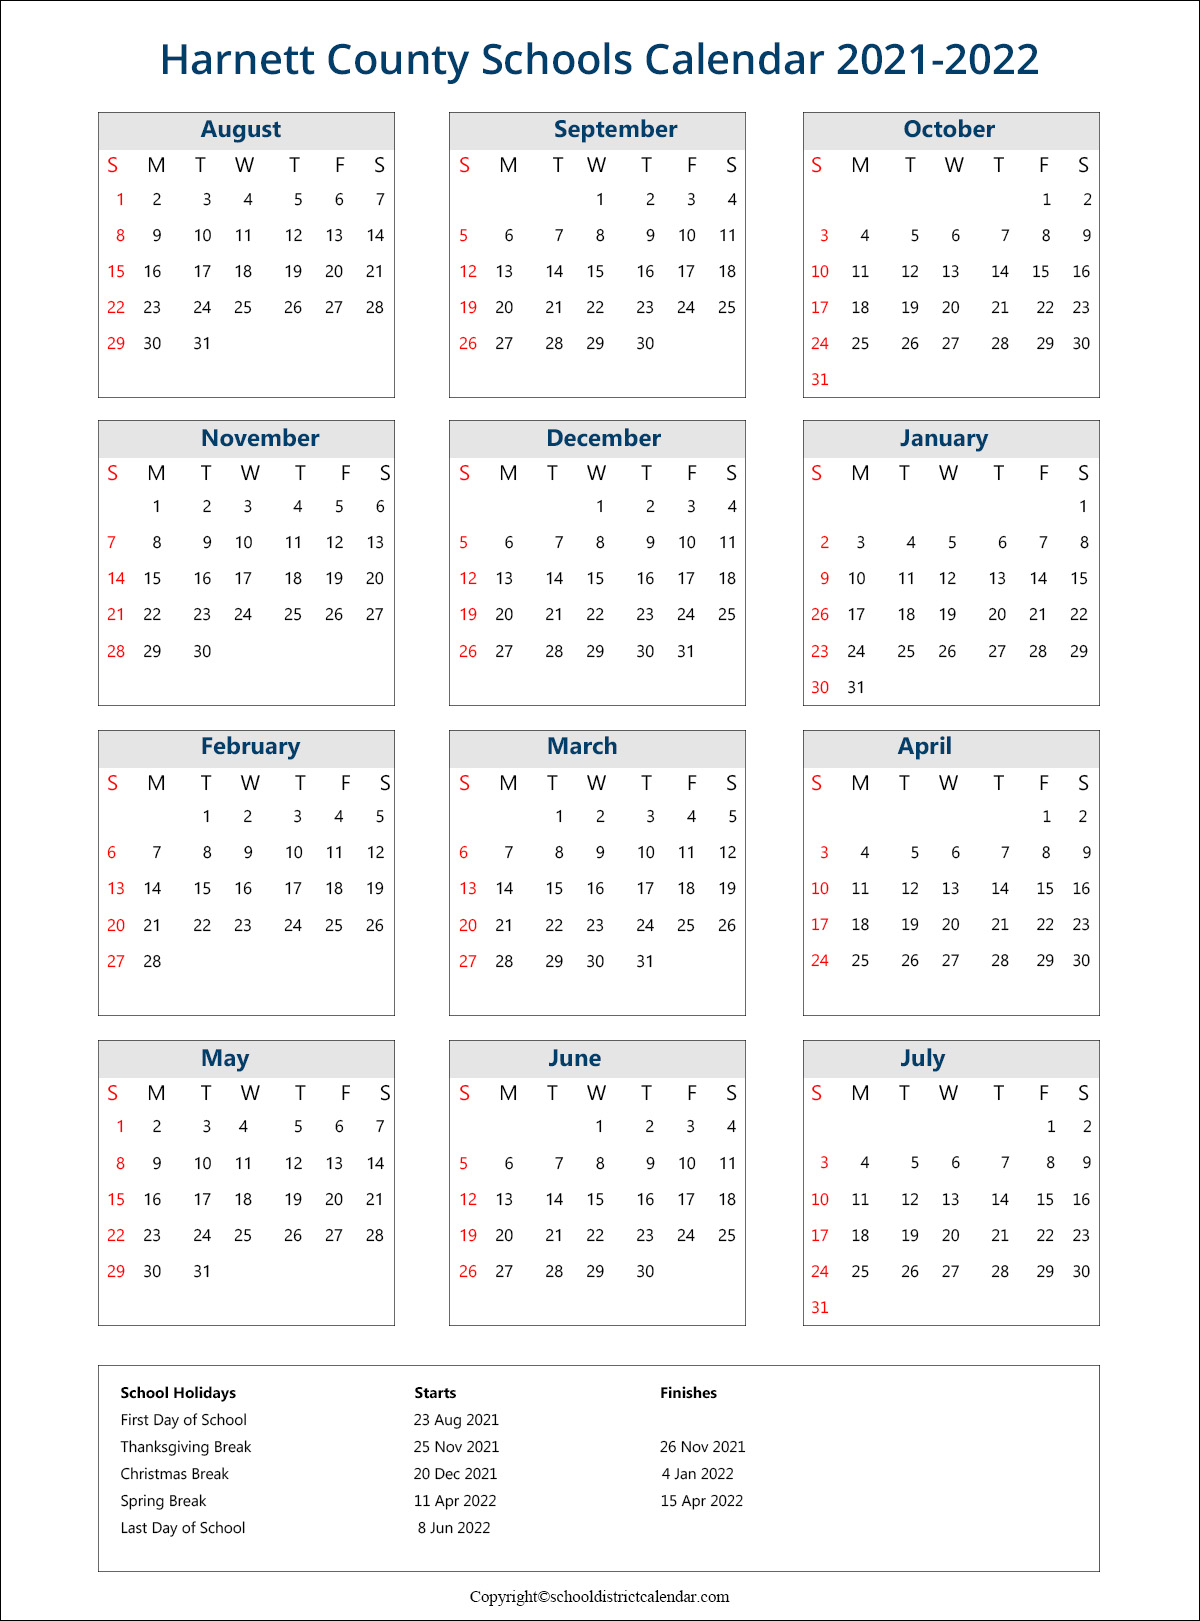 Harnett County Schools Calendar Holidays 2021-2022